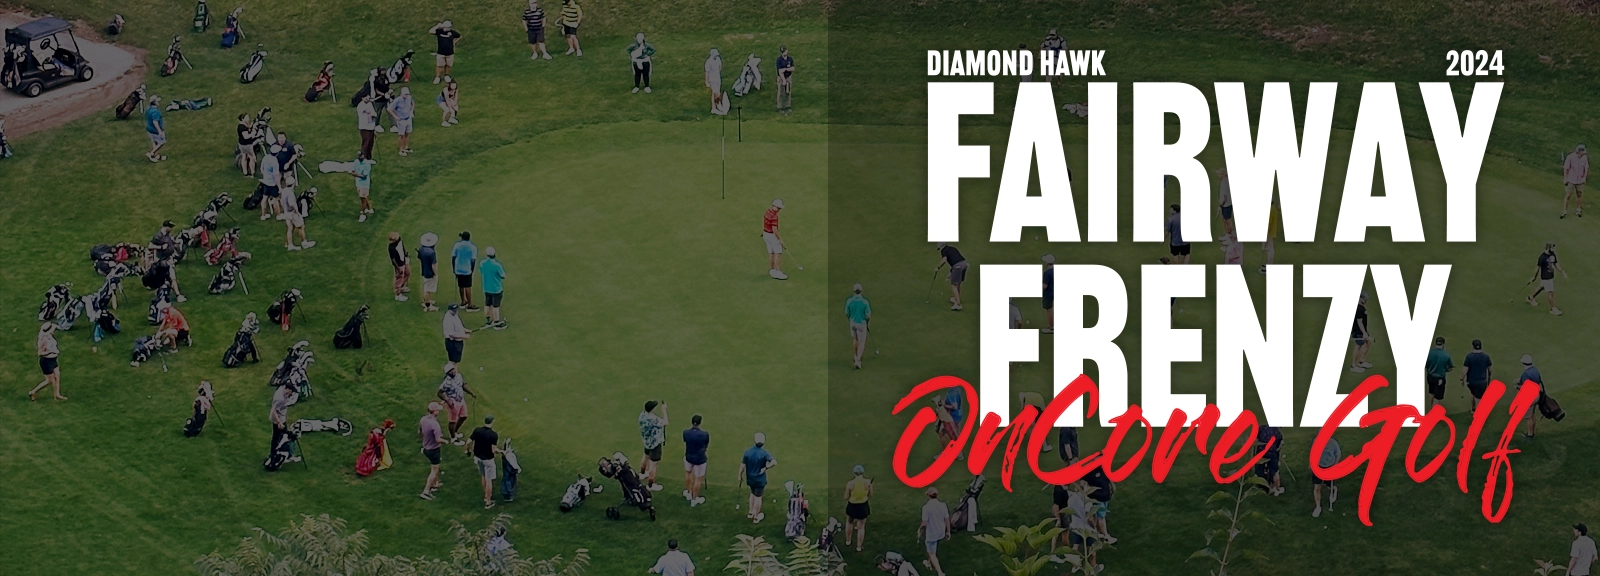 OnCore Golf Fairway Frenzy 2024